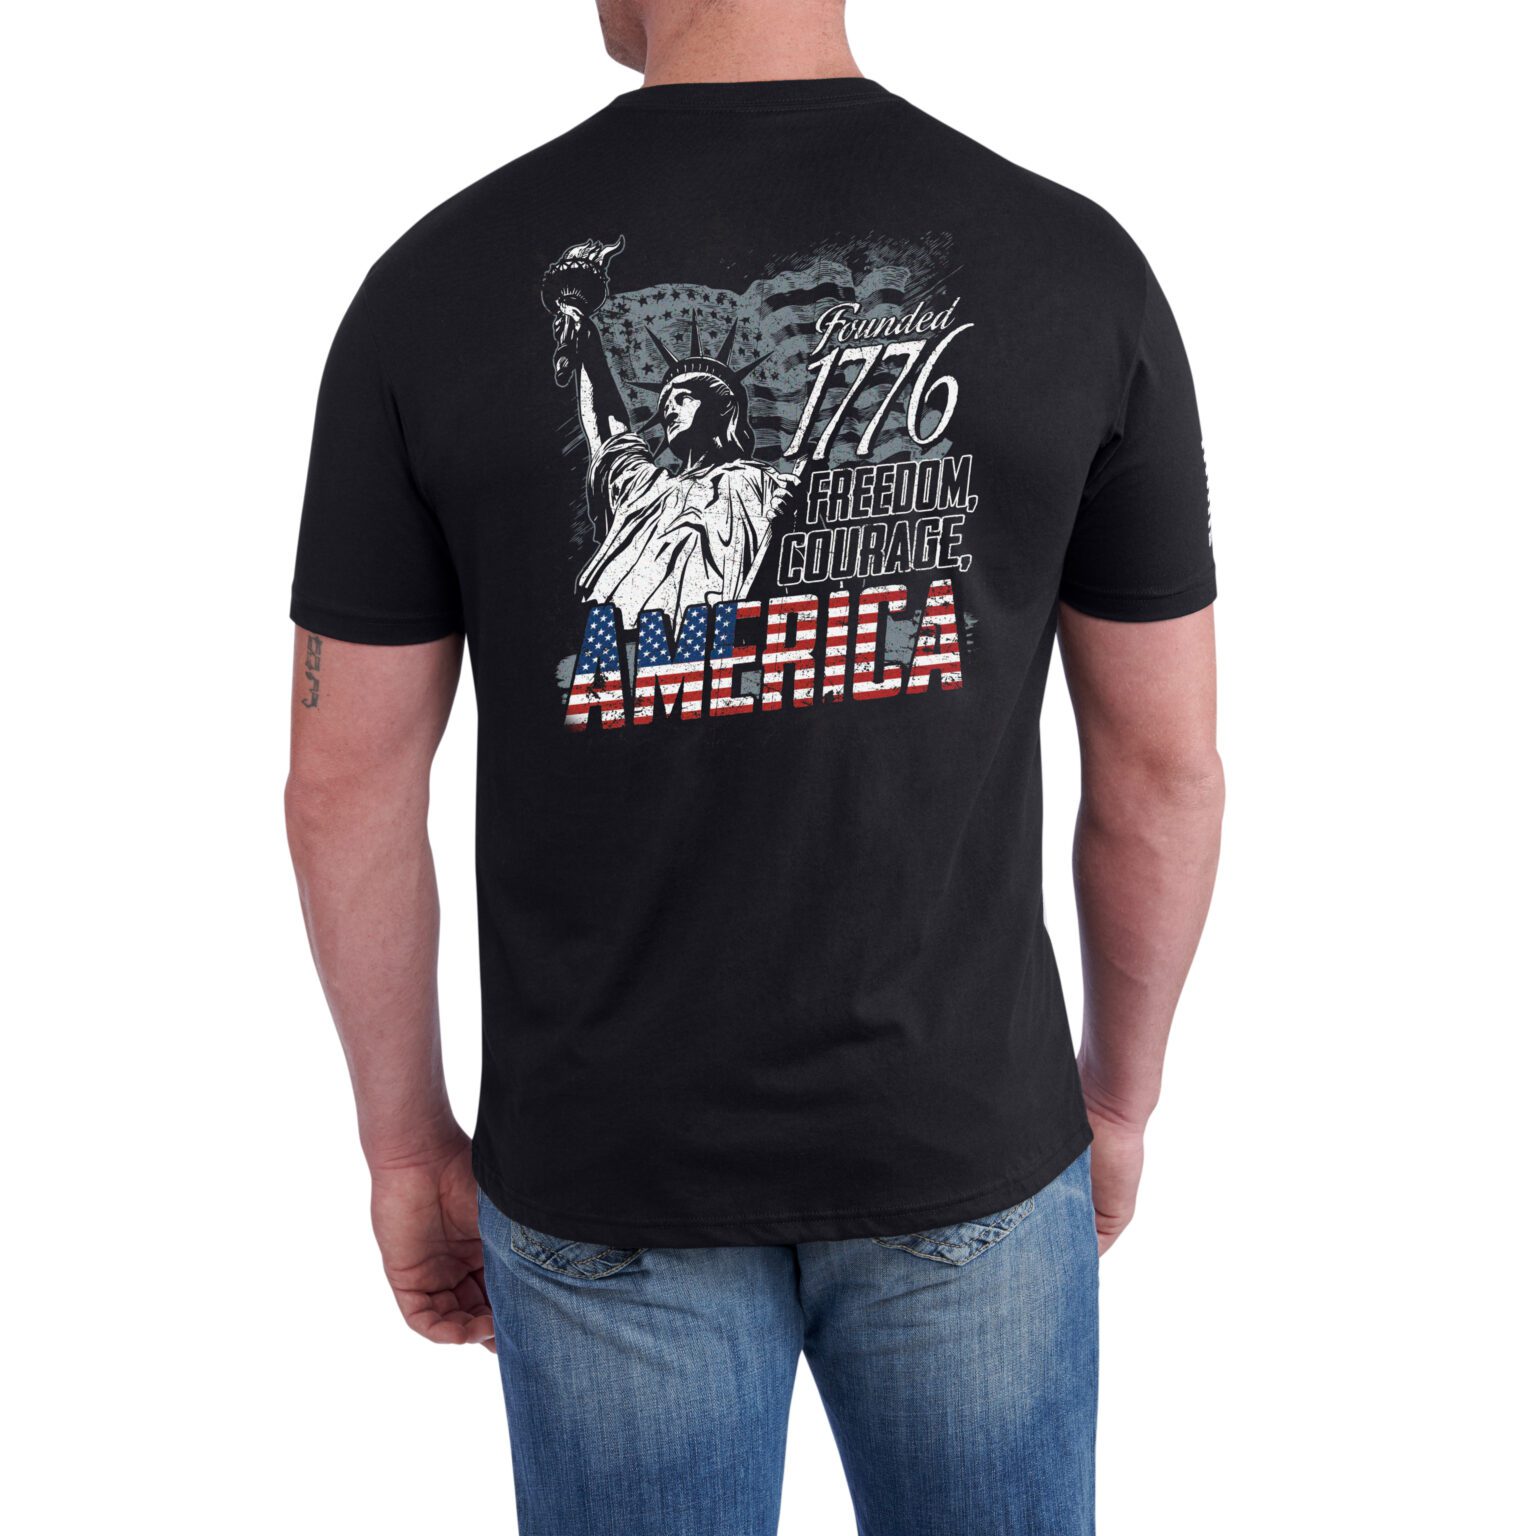 Shop Men's Apparel: Tshirts, Jackets, Hoodies | USCCA Store